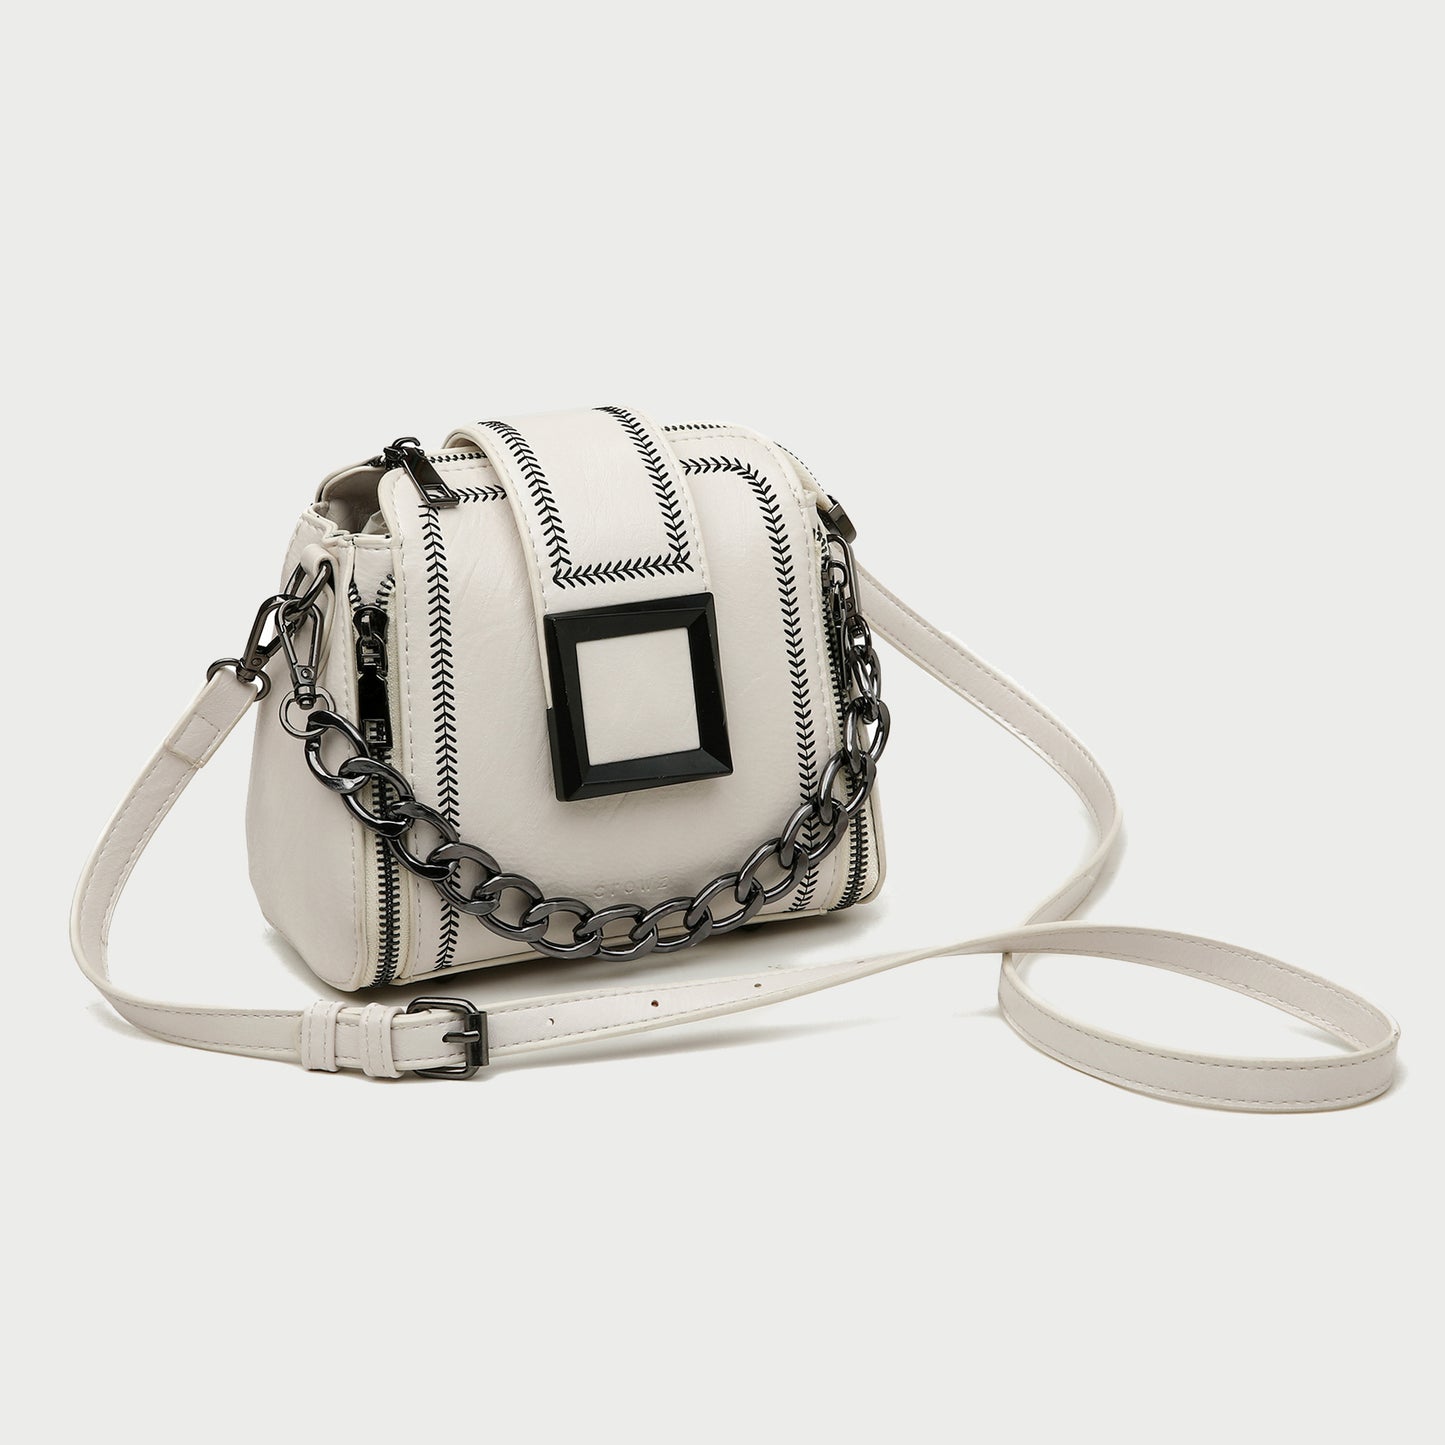 Frame embellished chervon topstitch zip side chain handle PU leather crossbody bag